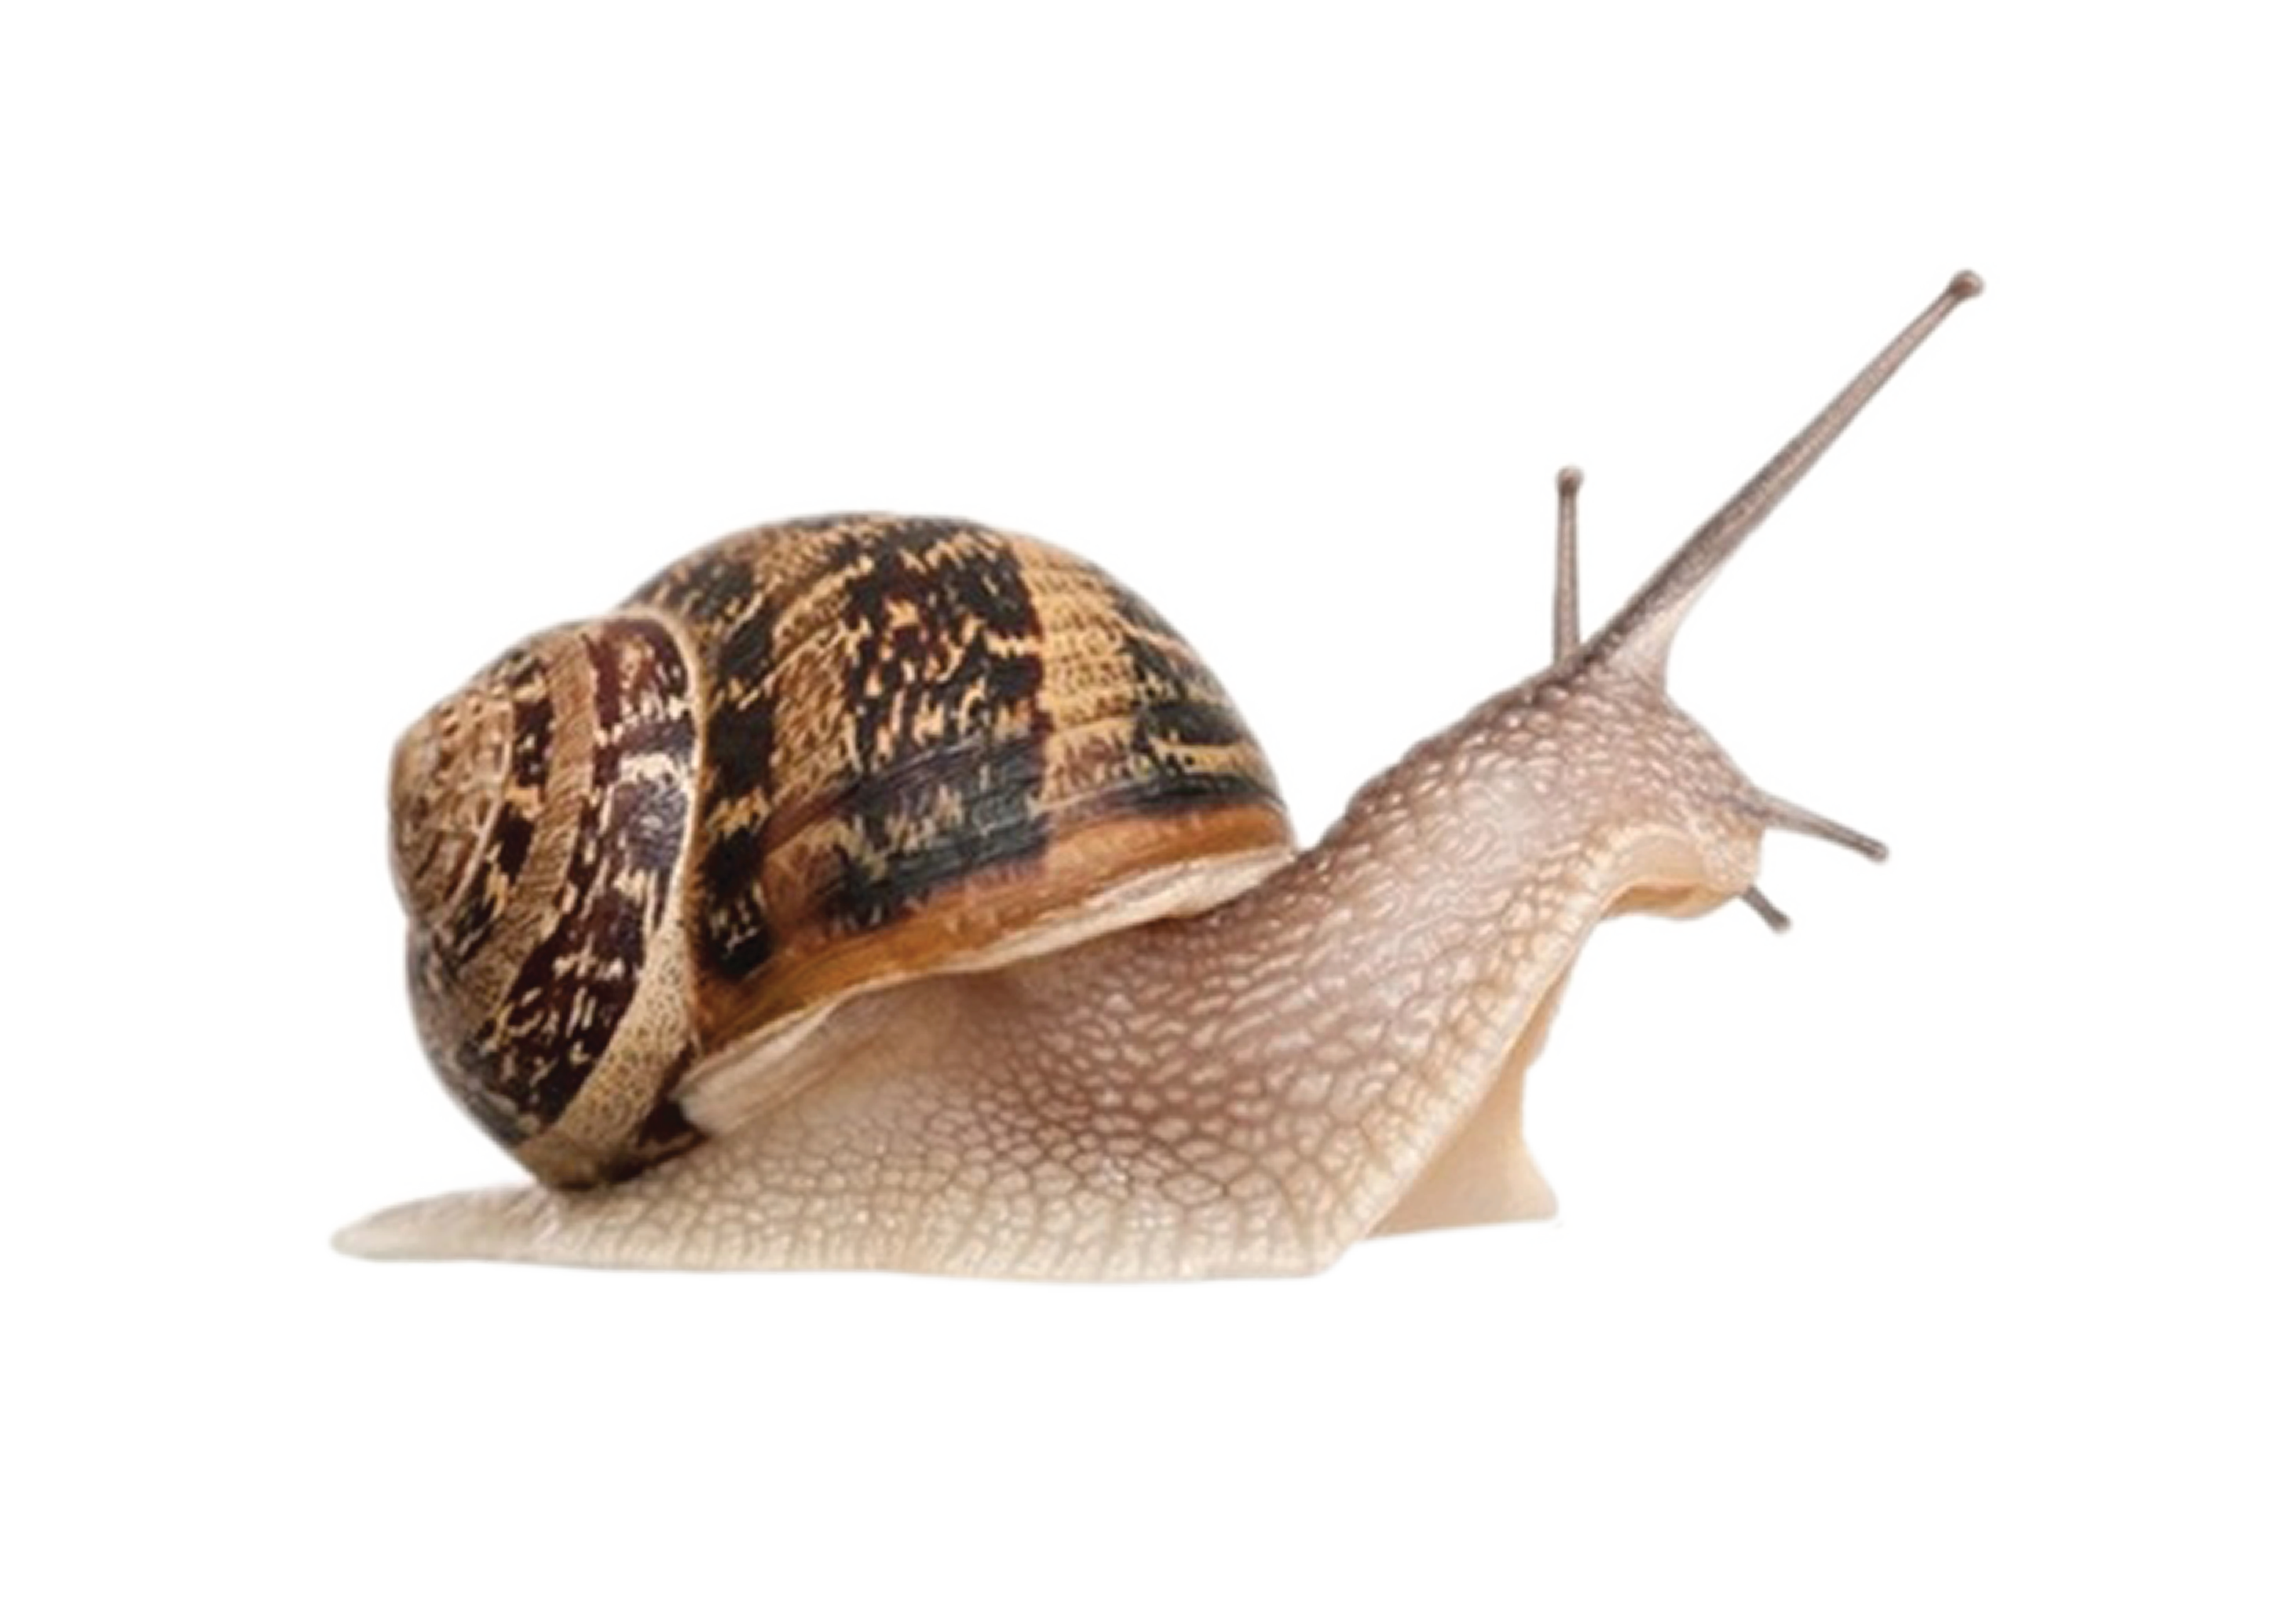 Snail Transparent Image